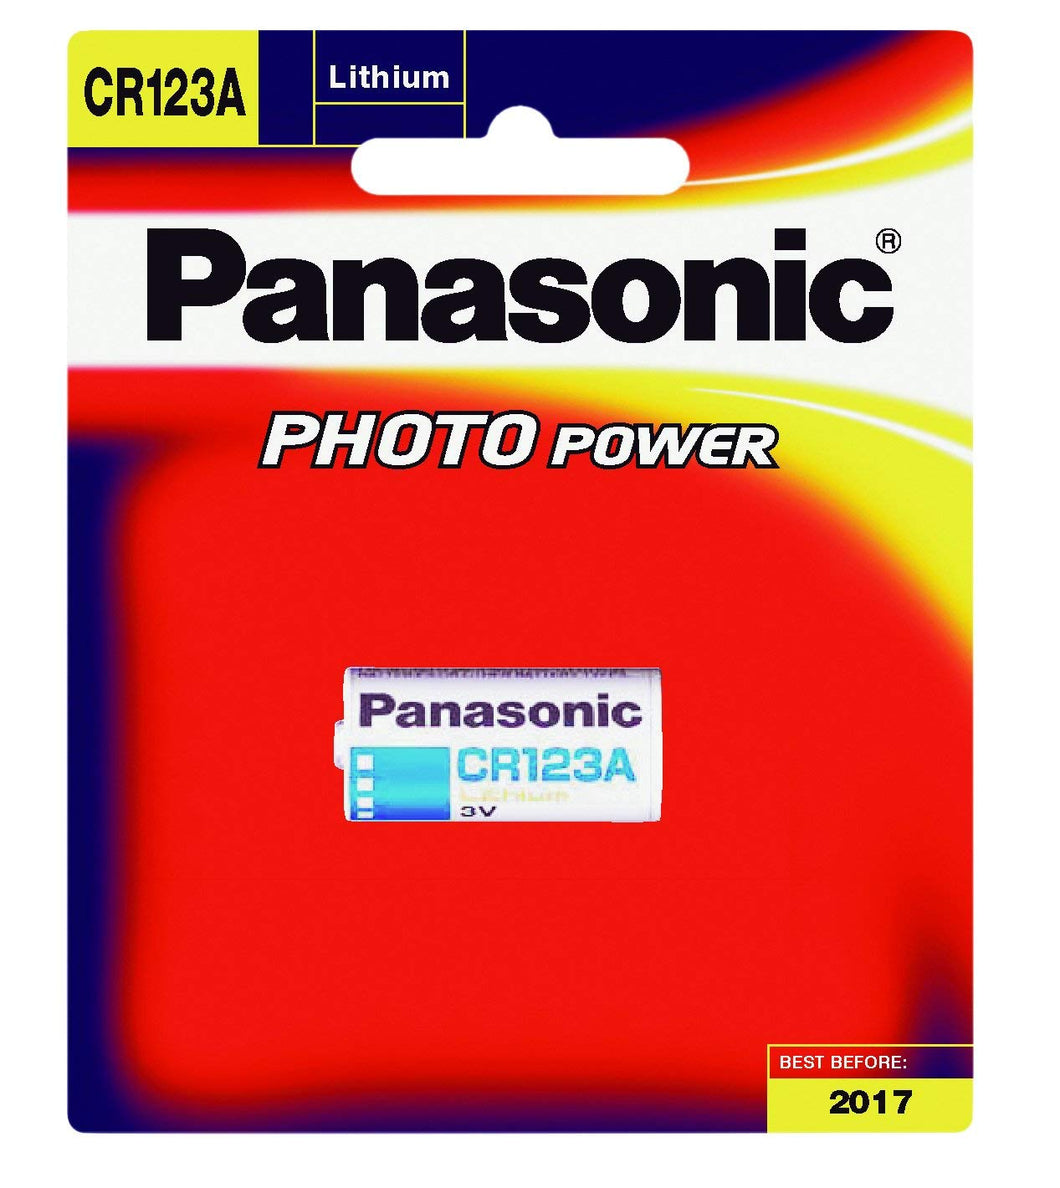 Panasonic CR123A Photo Power Lithium battery for cameras  CR123AW/1BE CR17345 - Royal Technologies :::::  genuinebattery.com